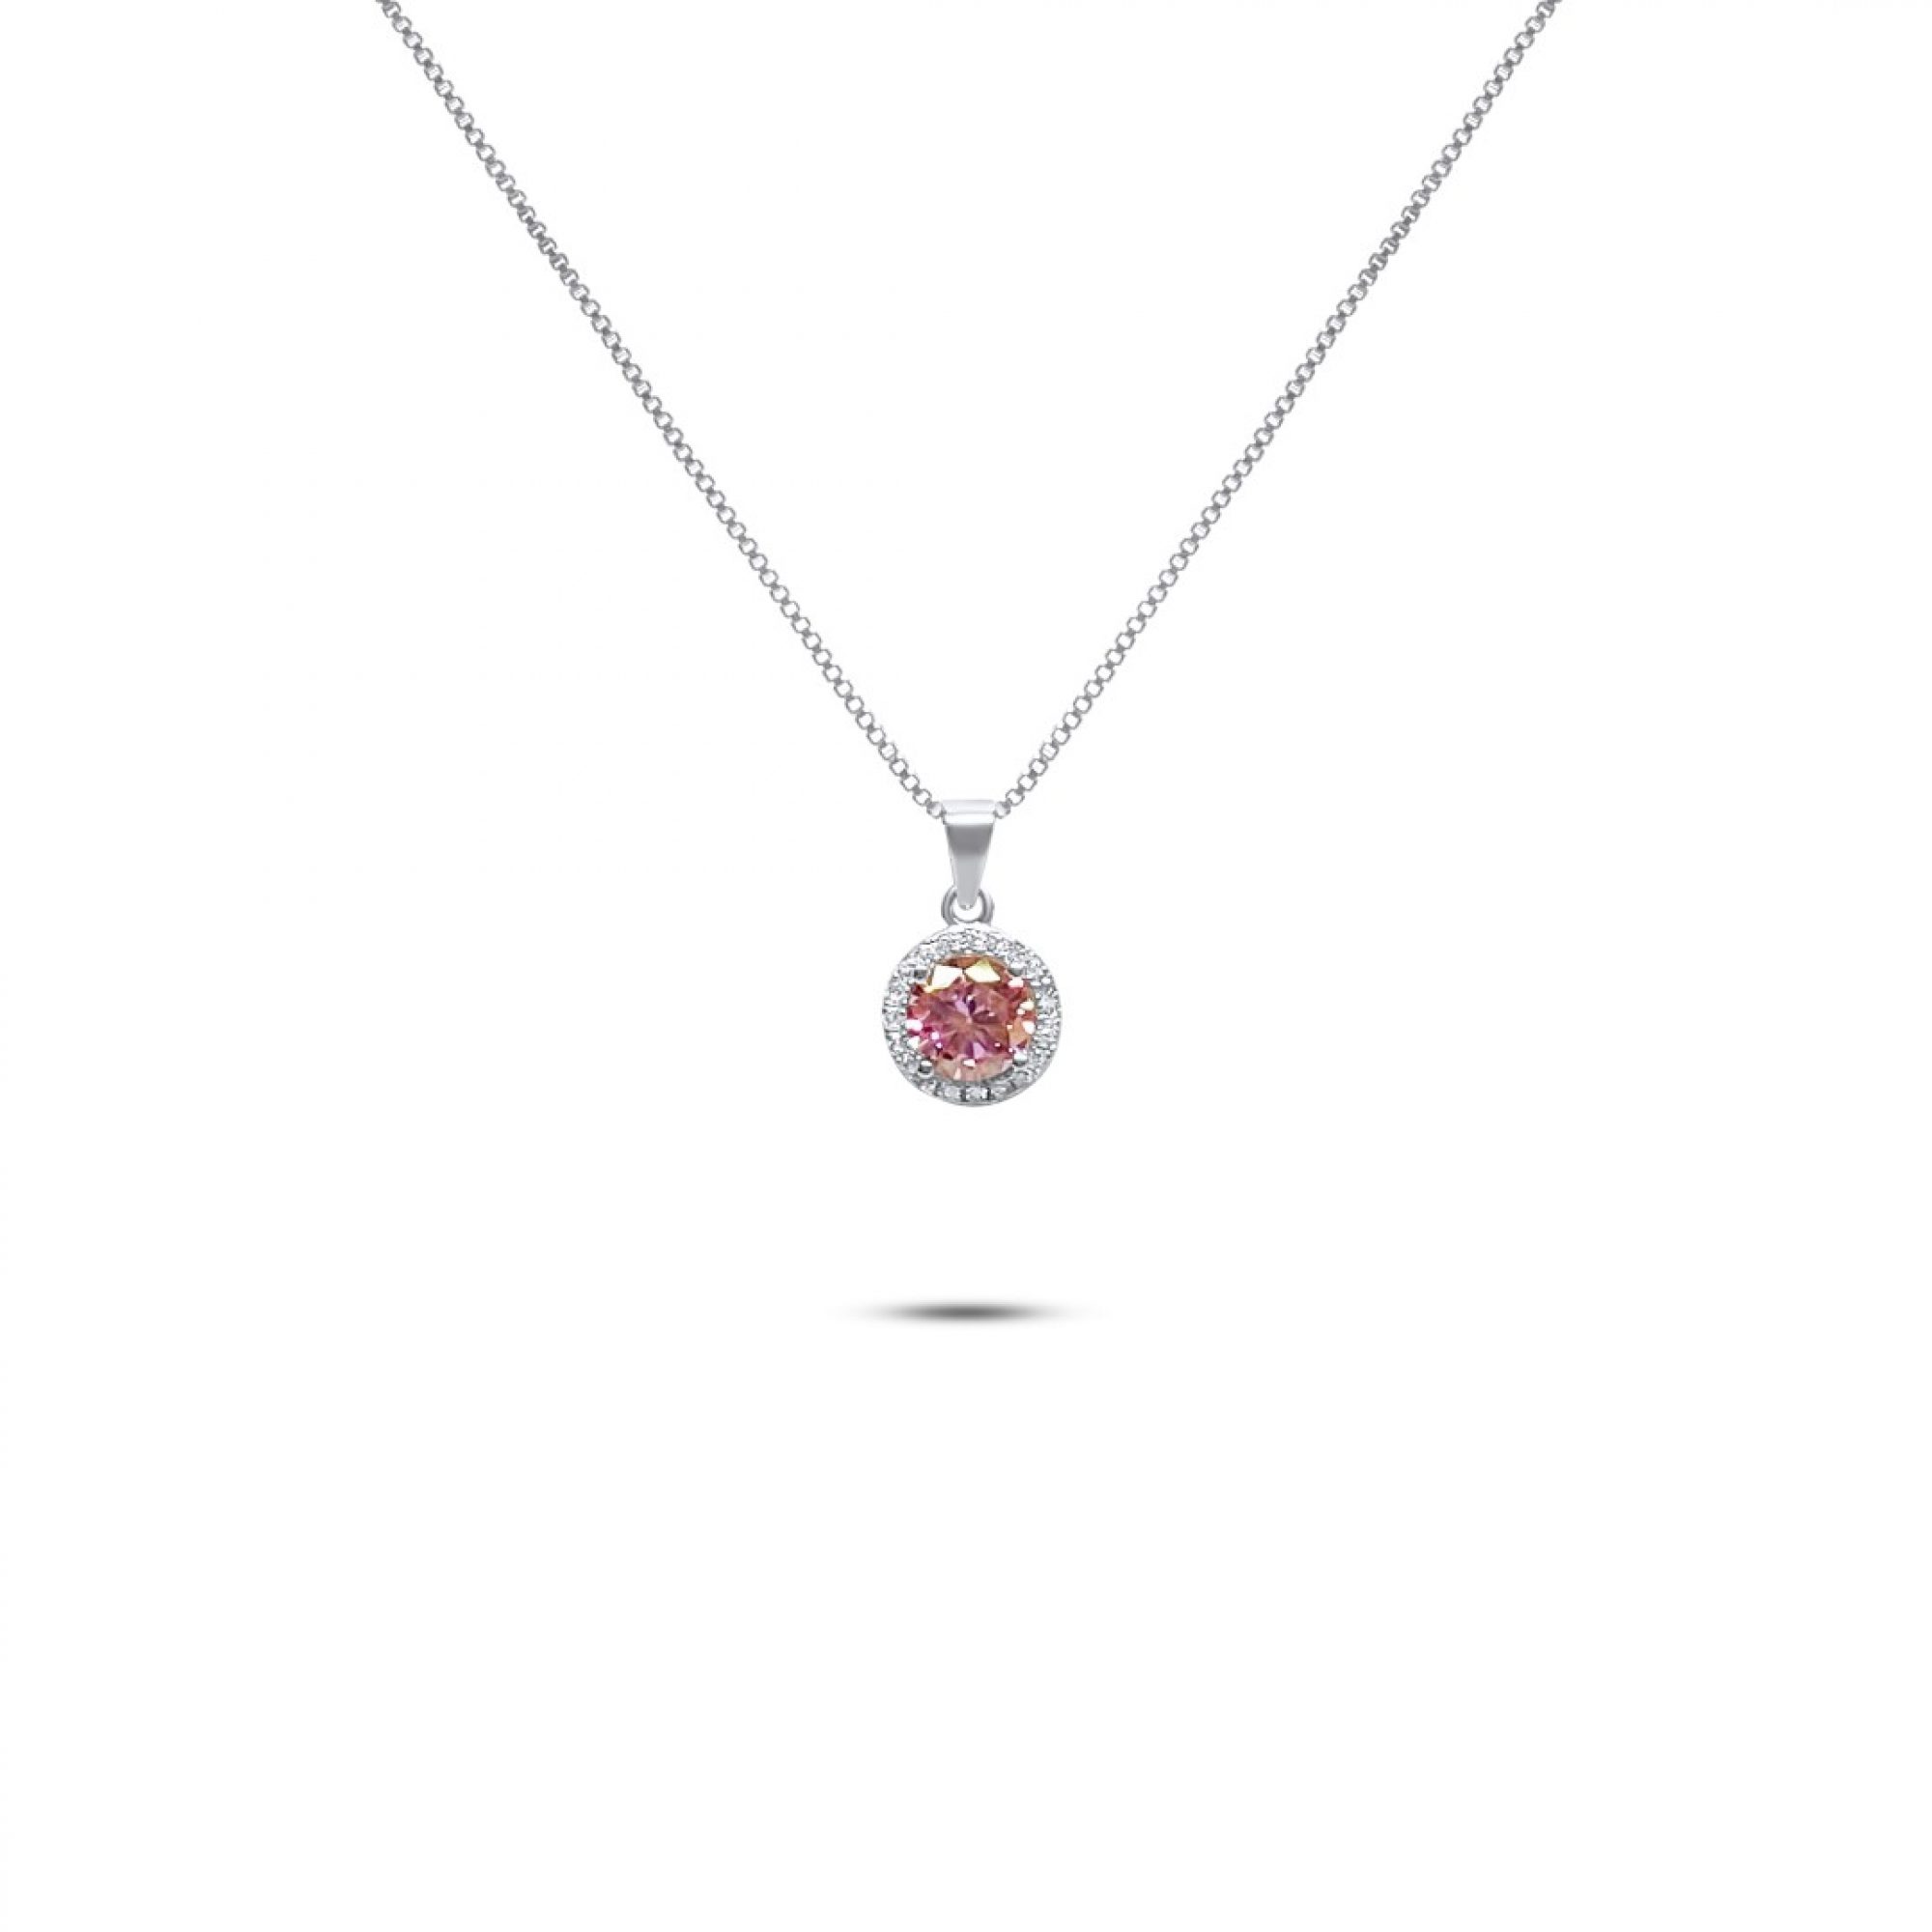 Necklace with pink quartz and zircon stones